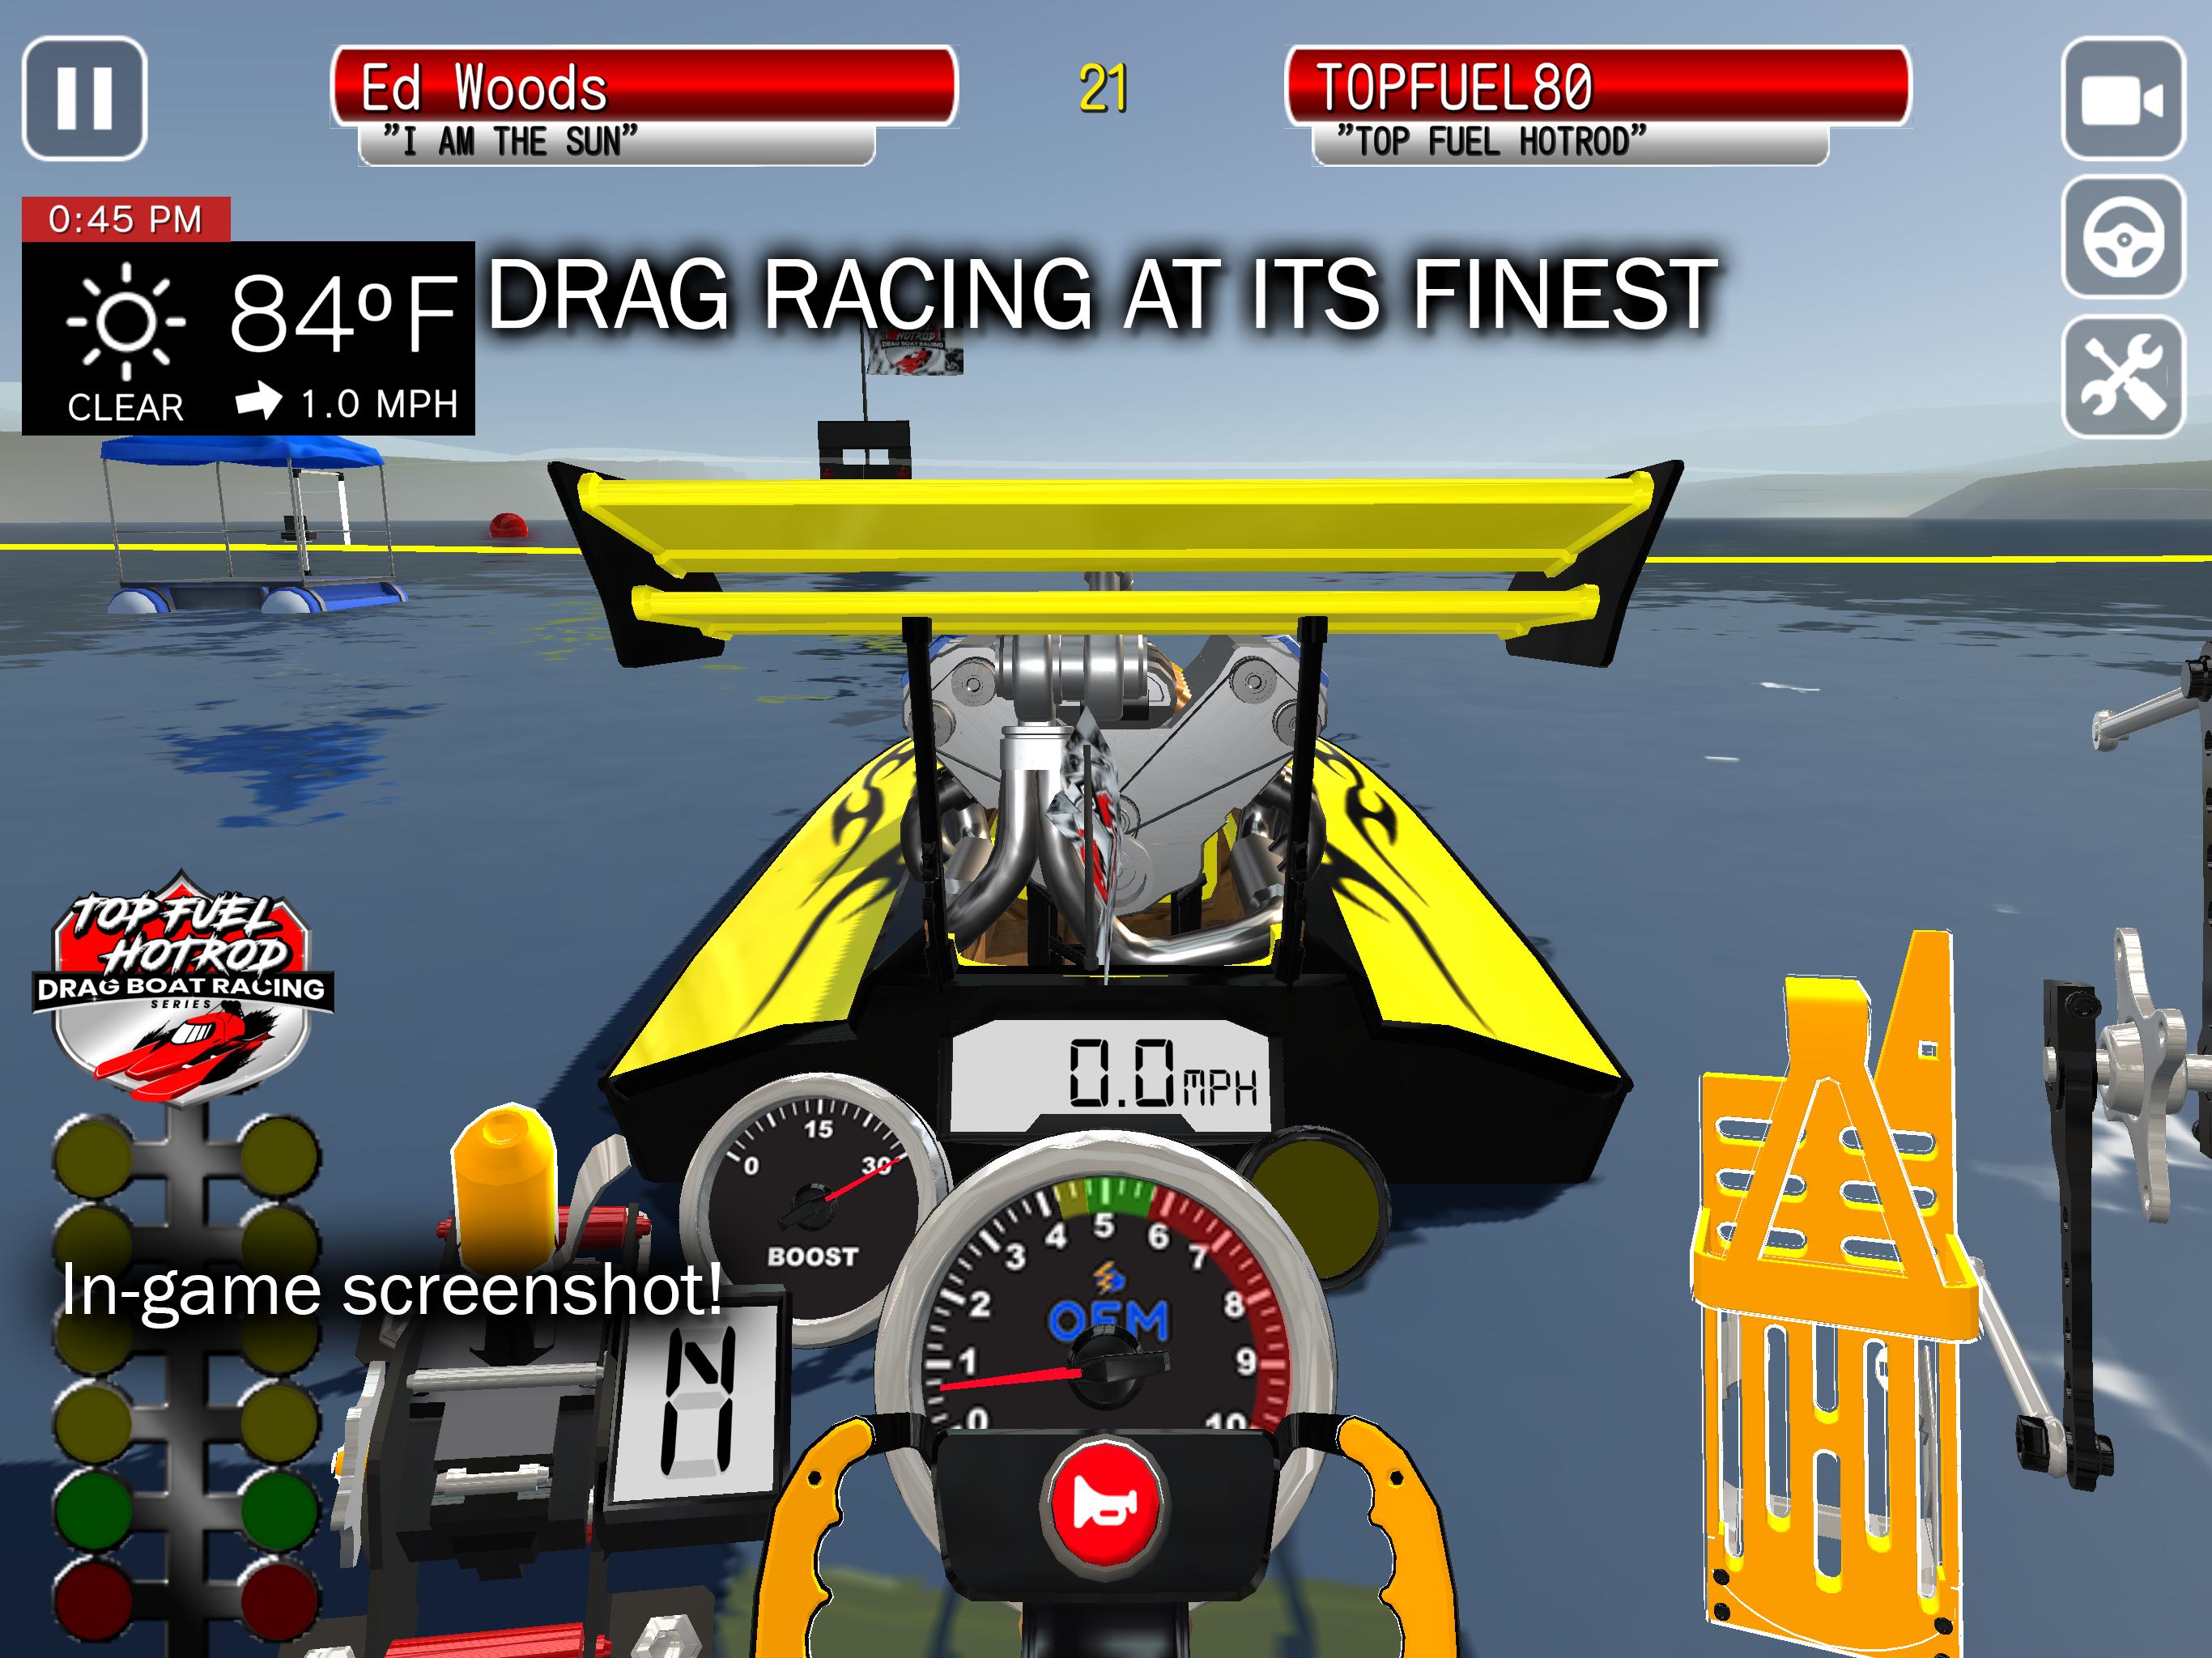 Top Fuel Hot Rod - Drag Boat Speed Racing Game 1.16 Screenshot 19